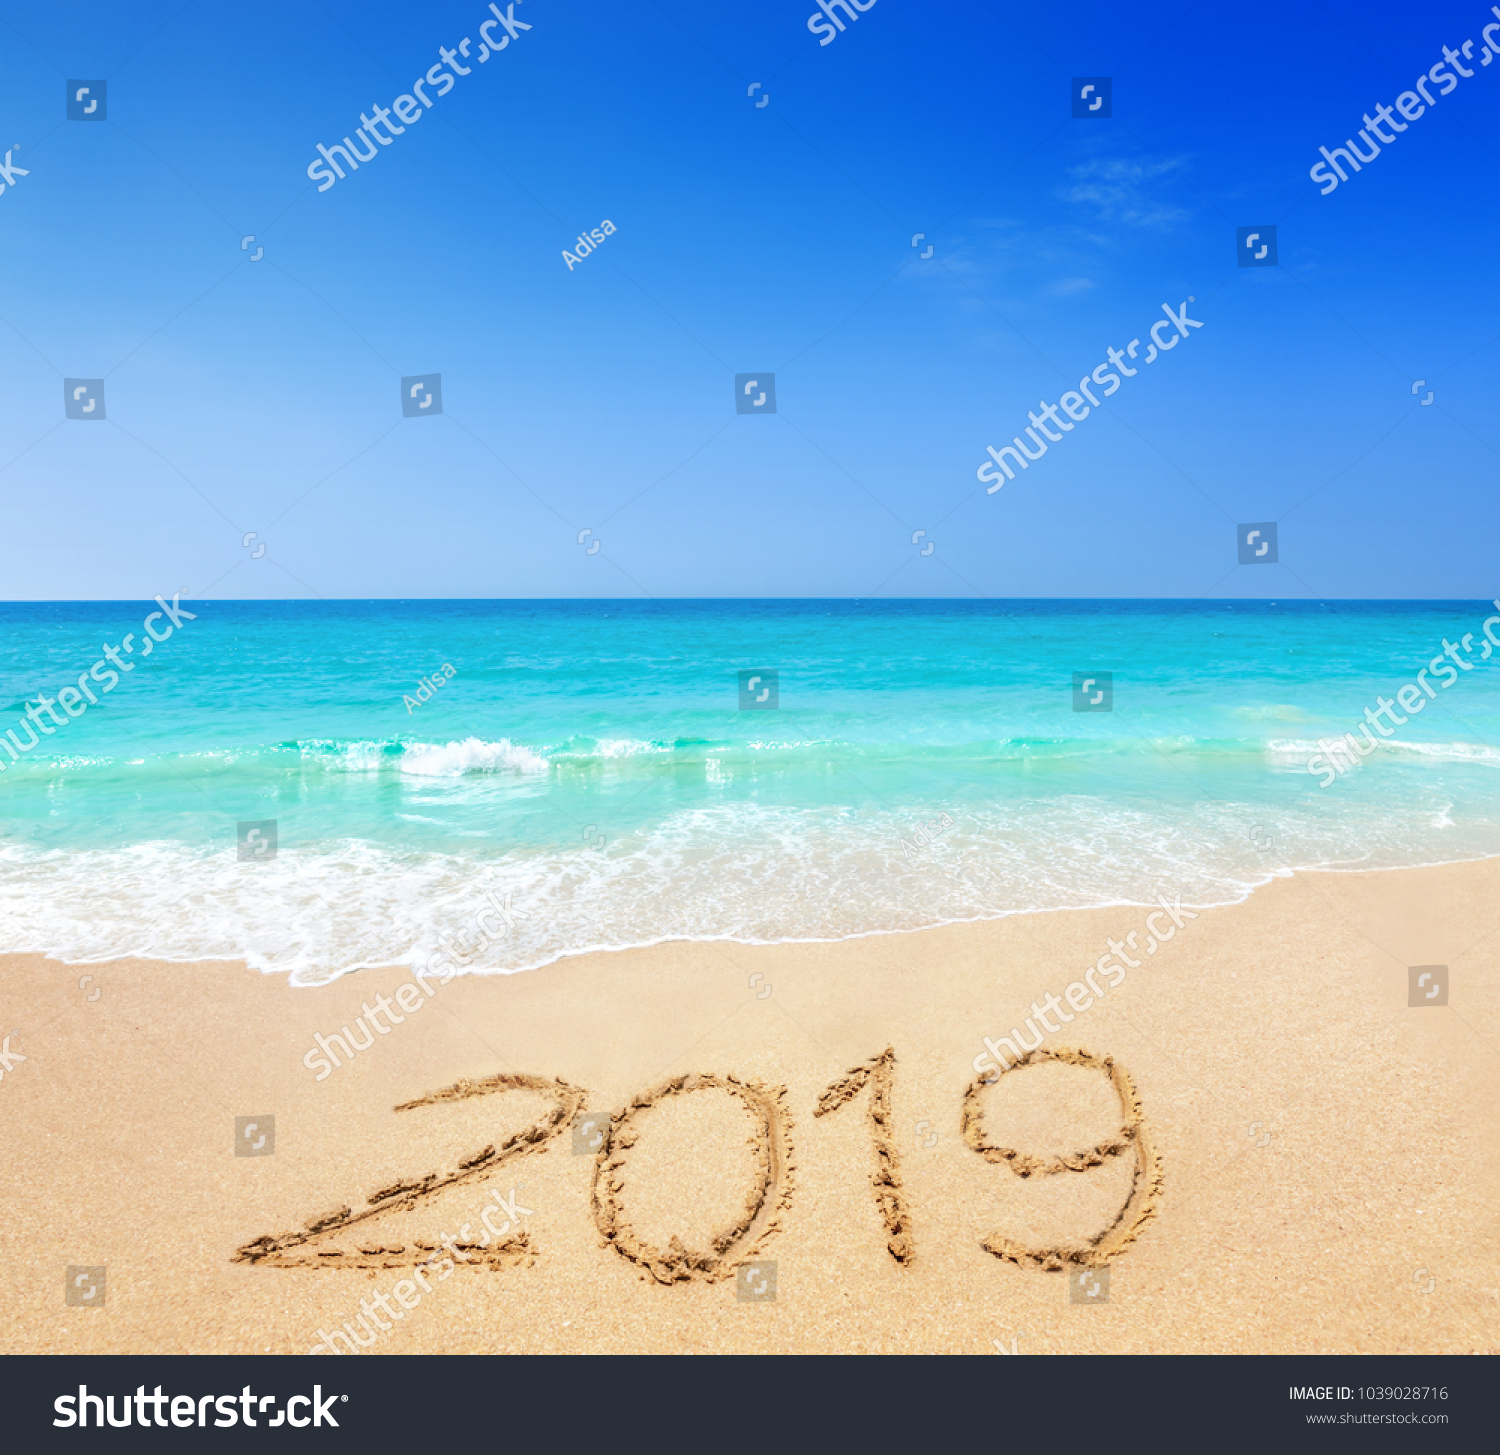 2019 written on sandy beach #1039028716